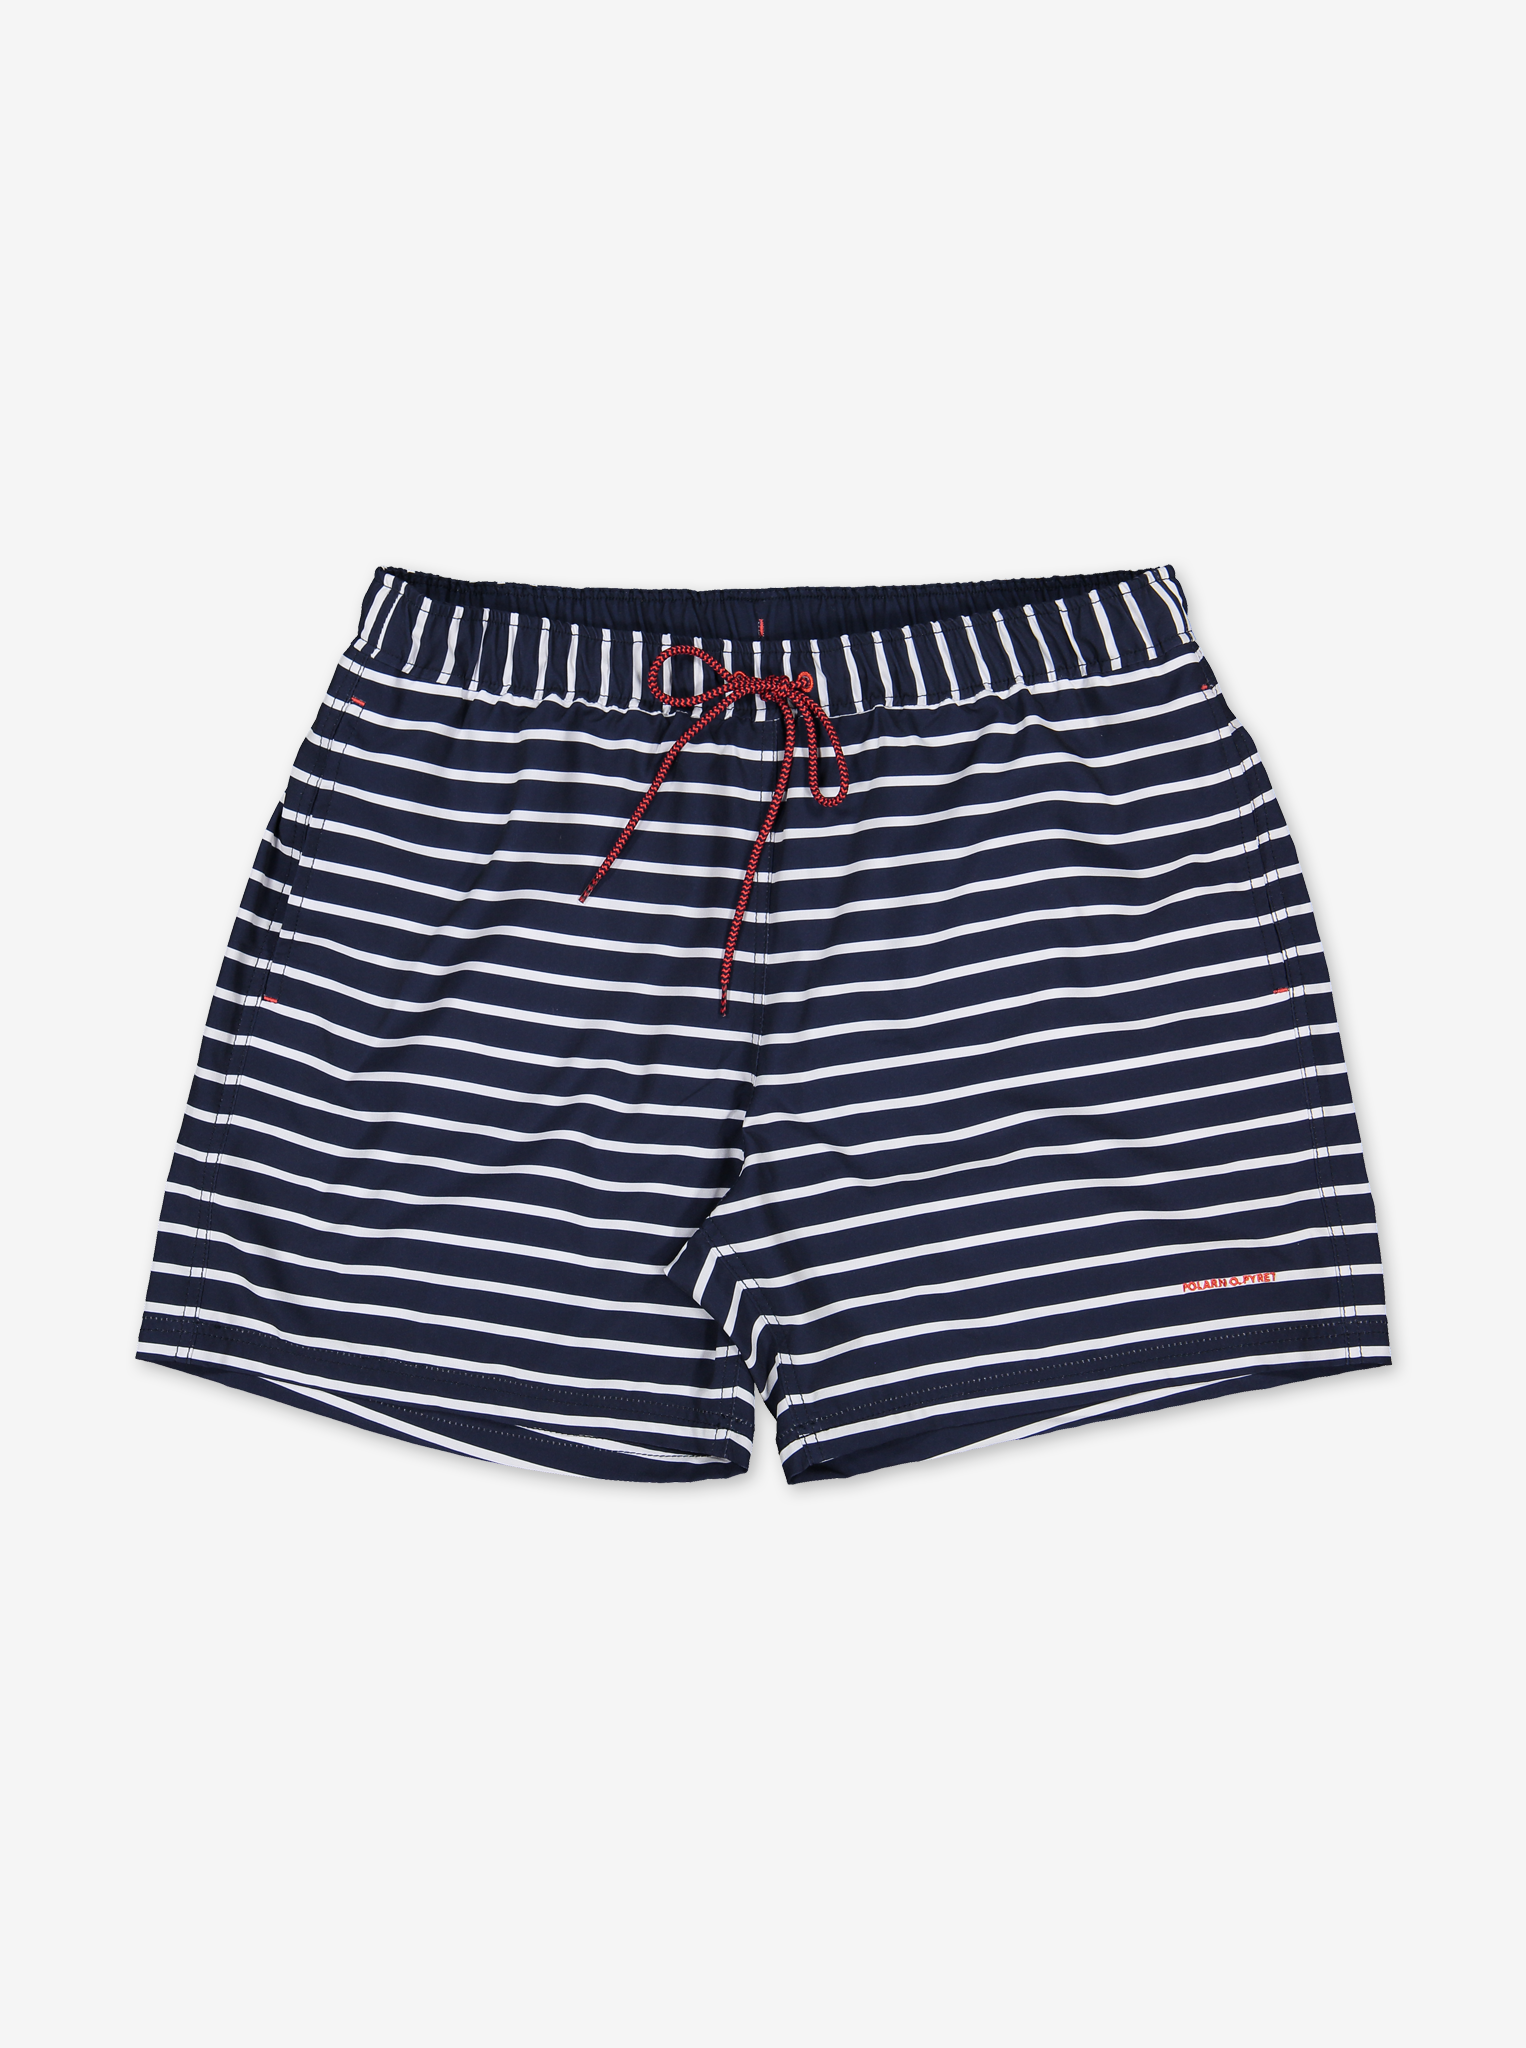 Striped Adult Swim Shorts